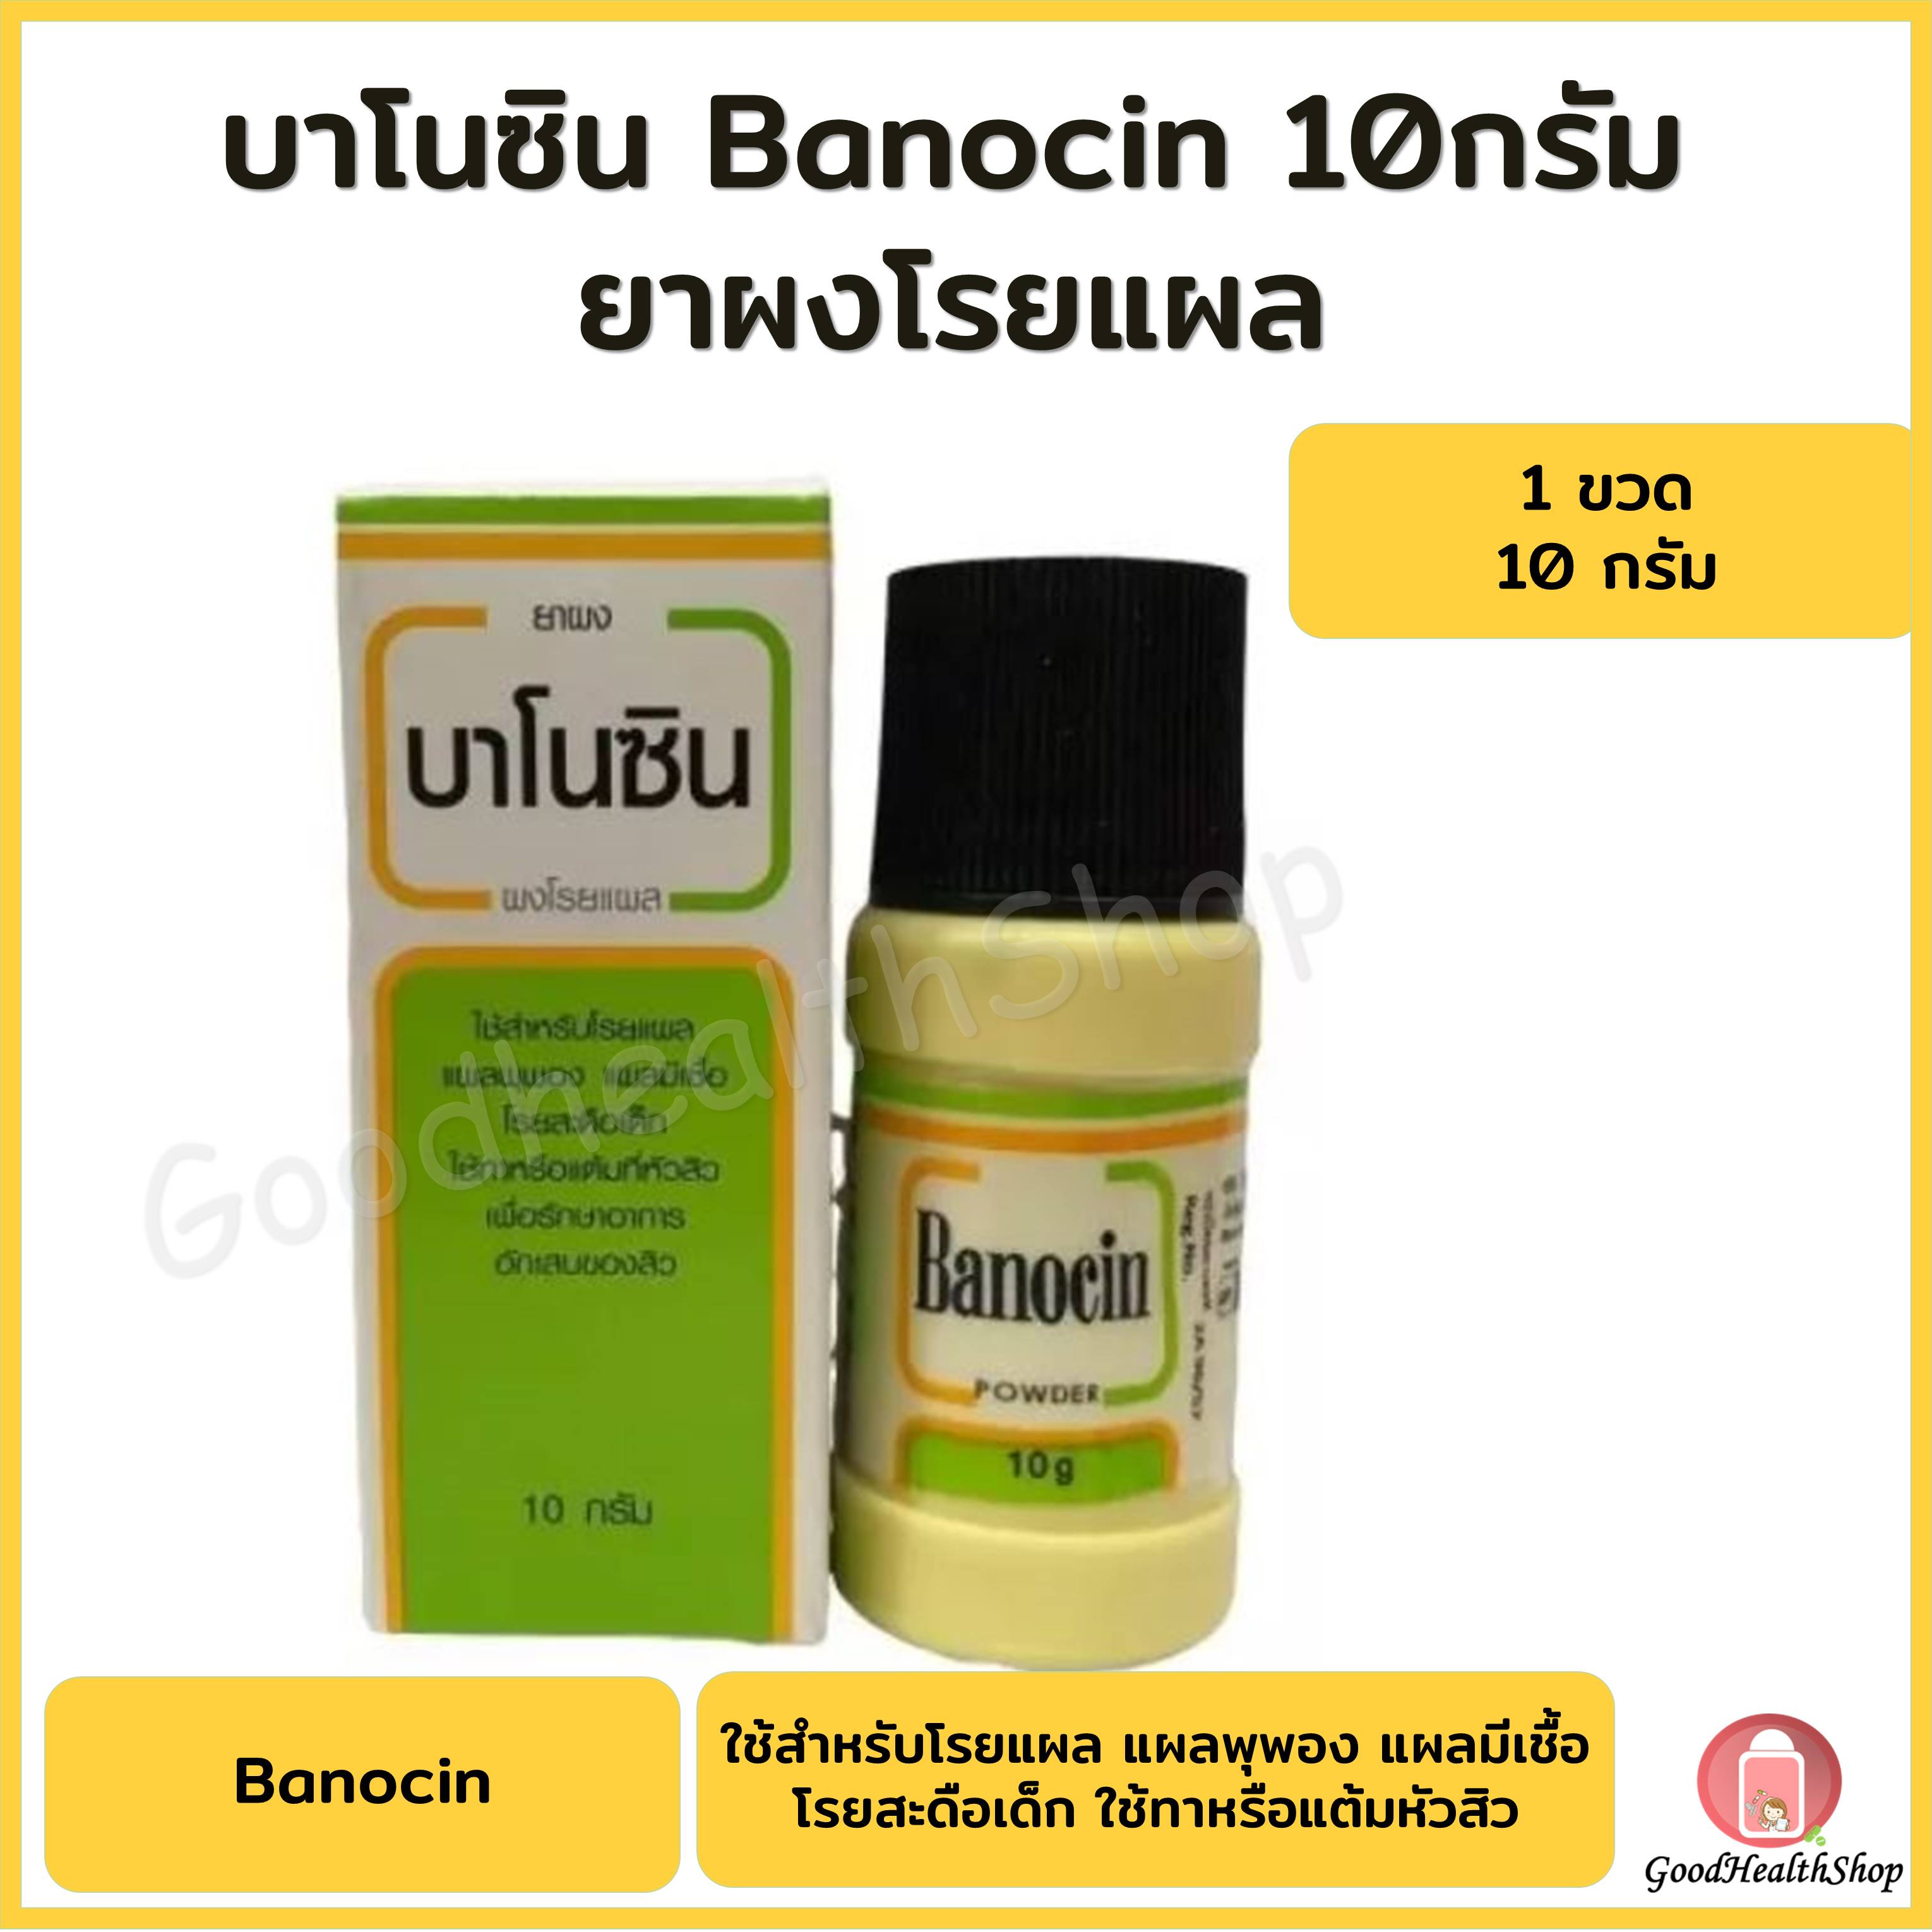 banocin powder บาโนซิน ผงโรยแผล ใช้สำหรับโรยแผล แผลพุพอง แผลมีเชื้อ ใช้ทาหรือแต้มหัวสิว ขนาด 10 กรัม